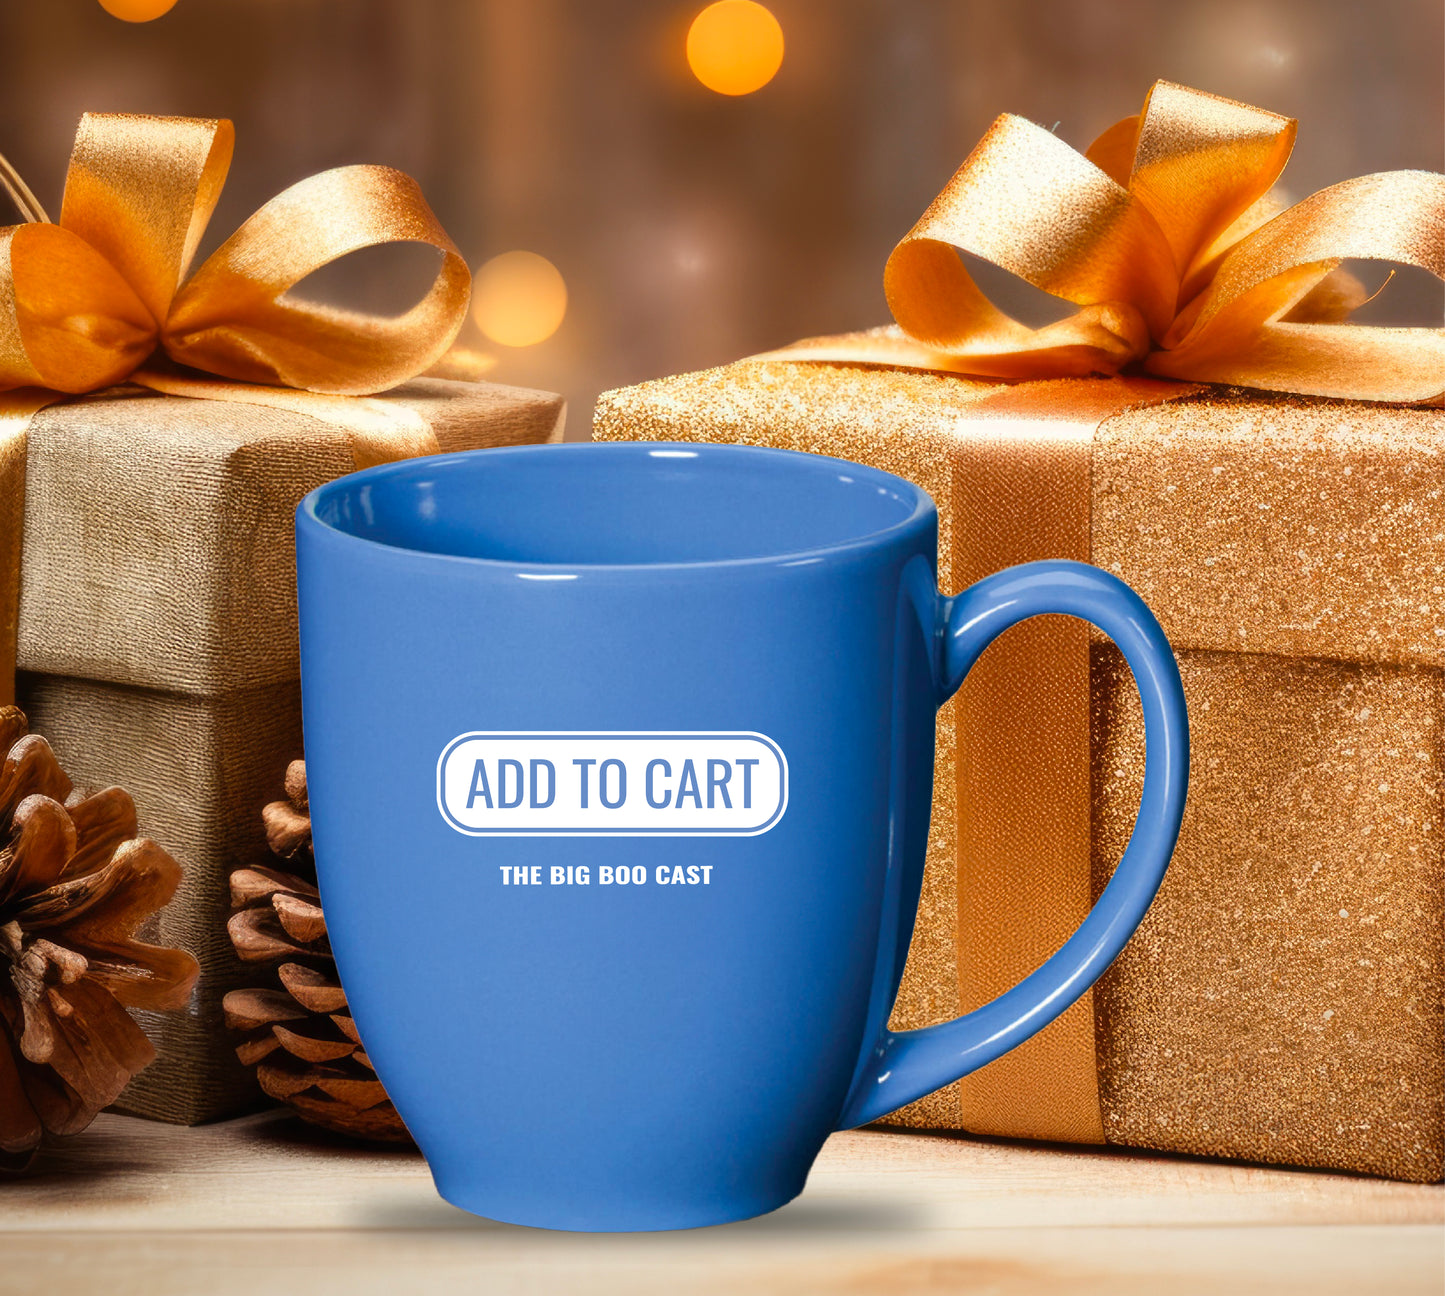 The "Add to Cart" Ceramic Coffee Mug